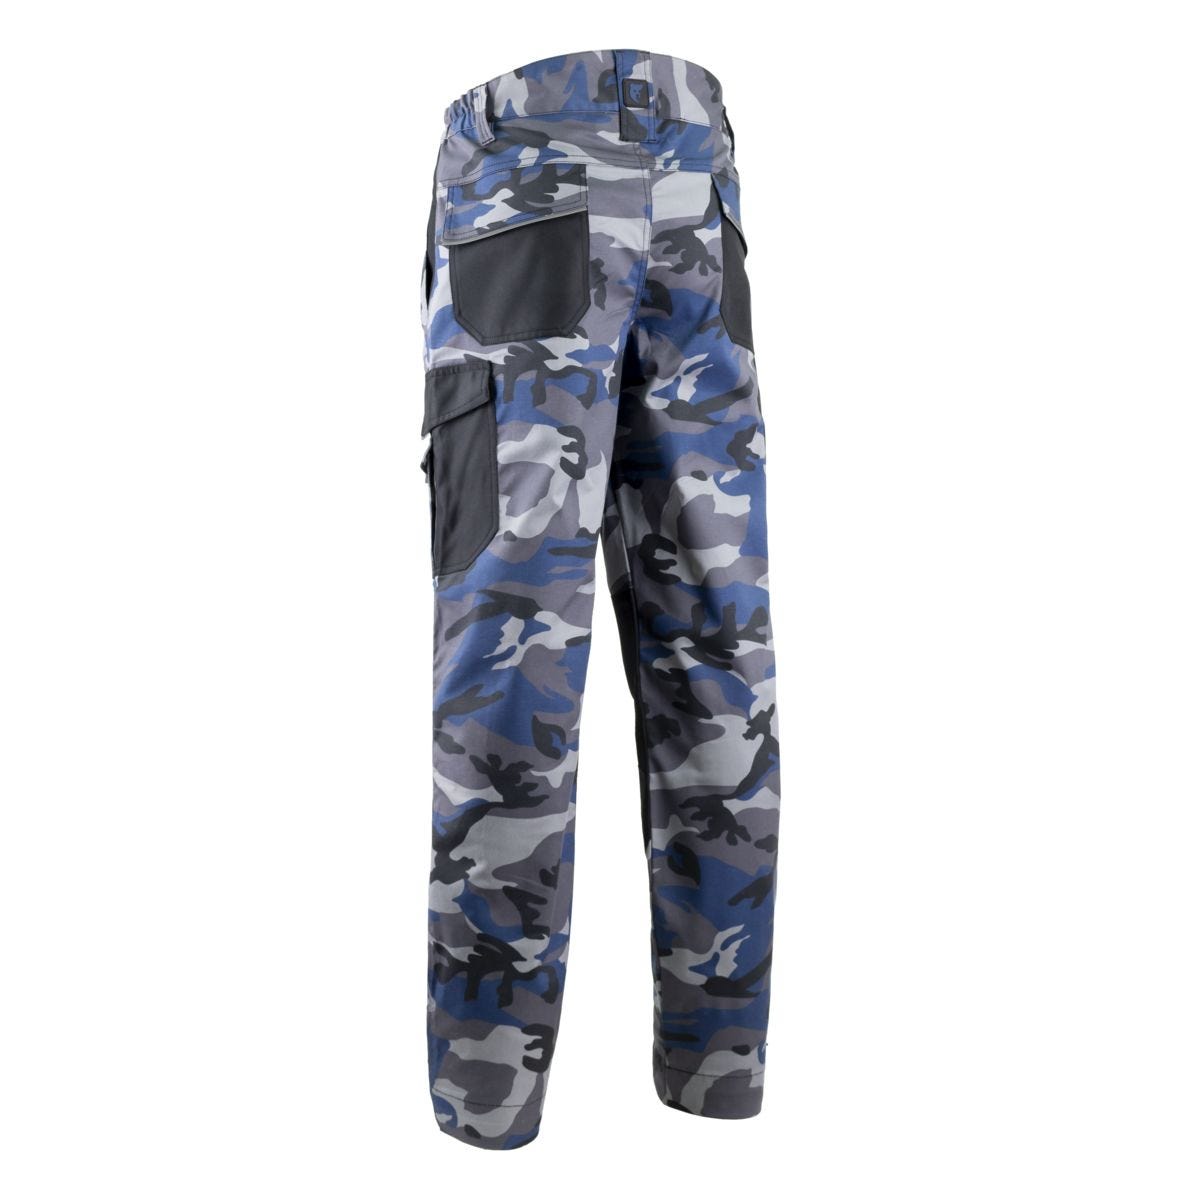 Pantalon KAMMO Camouflage Bleu-Gris - COVERGUARD - Taille 3XL 1